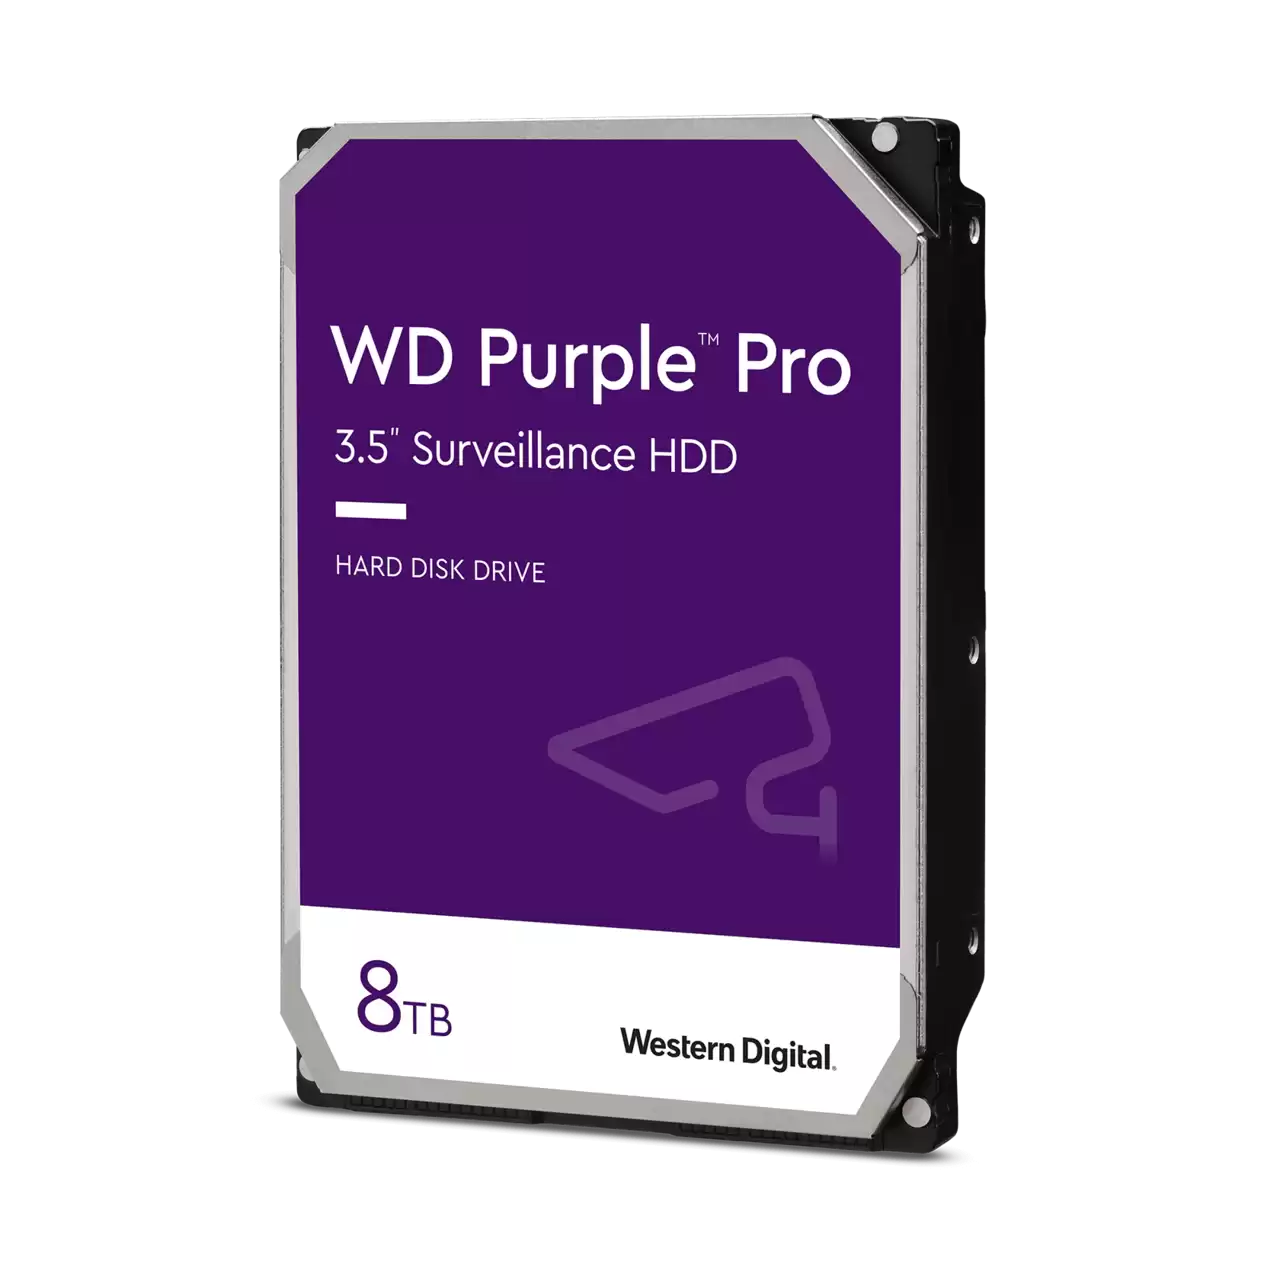 WD Purple Pro 8 TB Surveillance Hard Drive